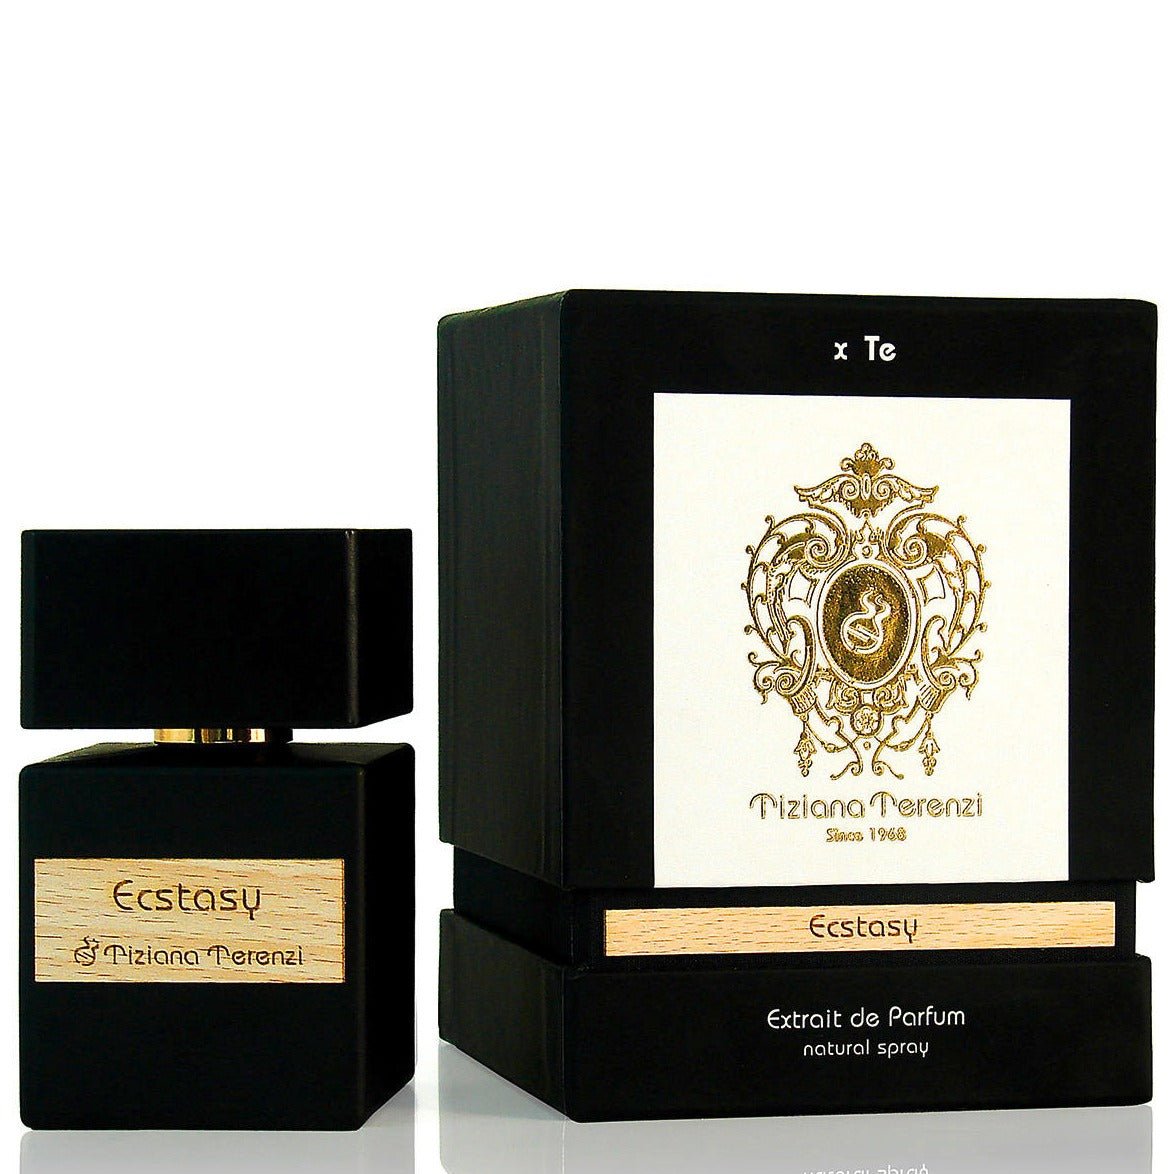 Tiziana Terenzi Akragas Extrait De Parfum | My Perfume Shop Australia